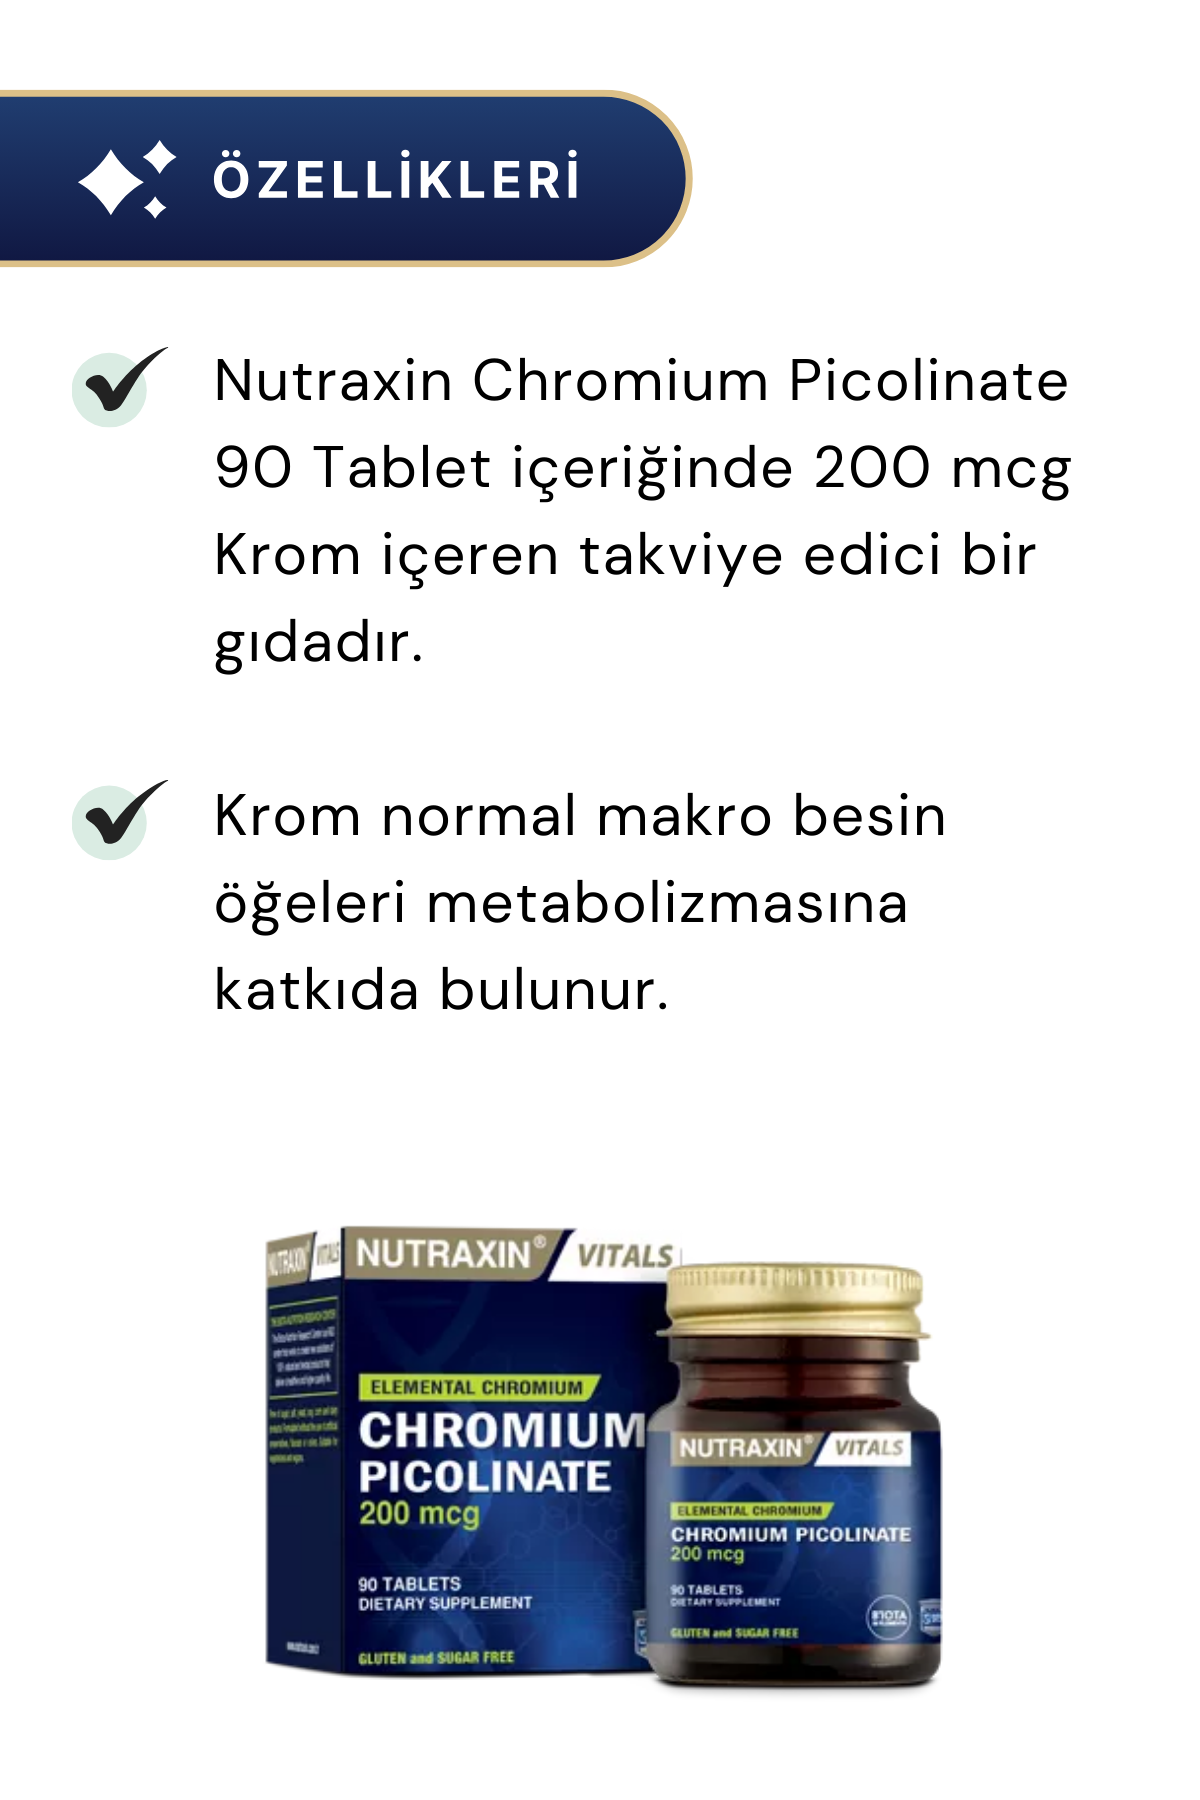 Nutraxin Chromium Picolinate 90 Tablet 3'lü Paket